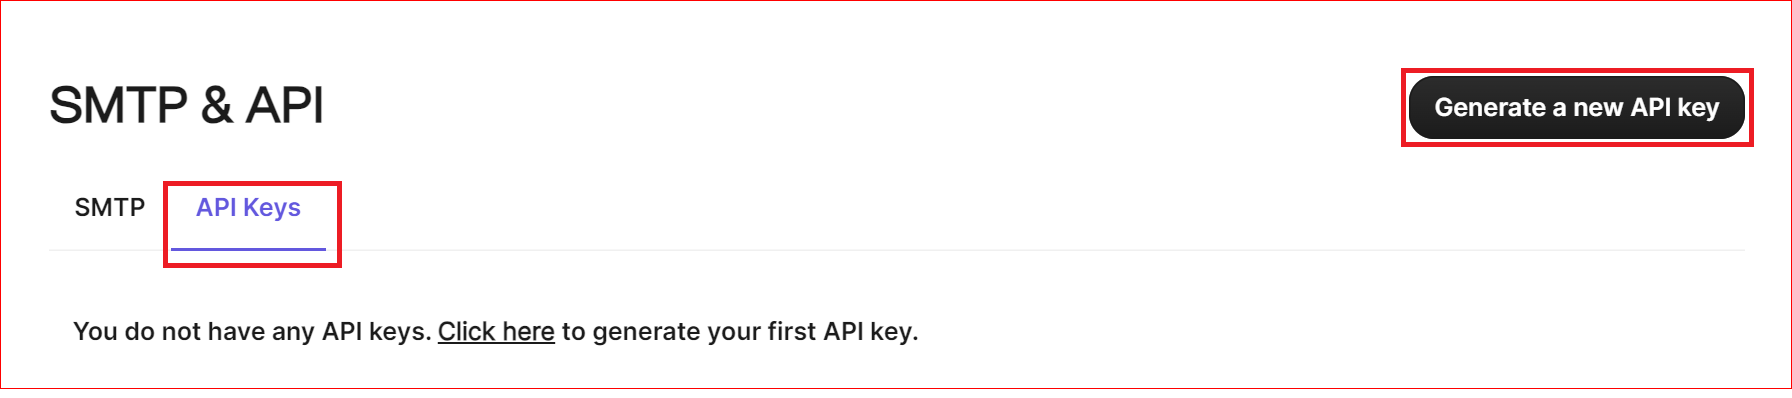 Generate a new API key 